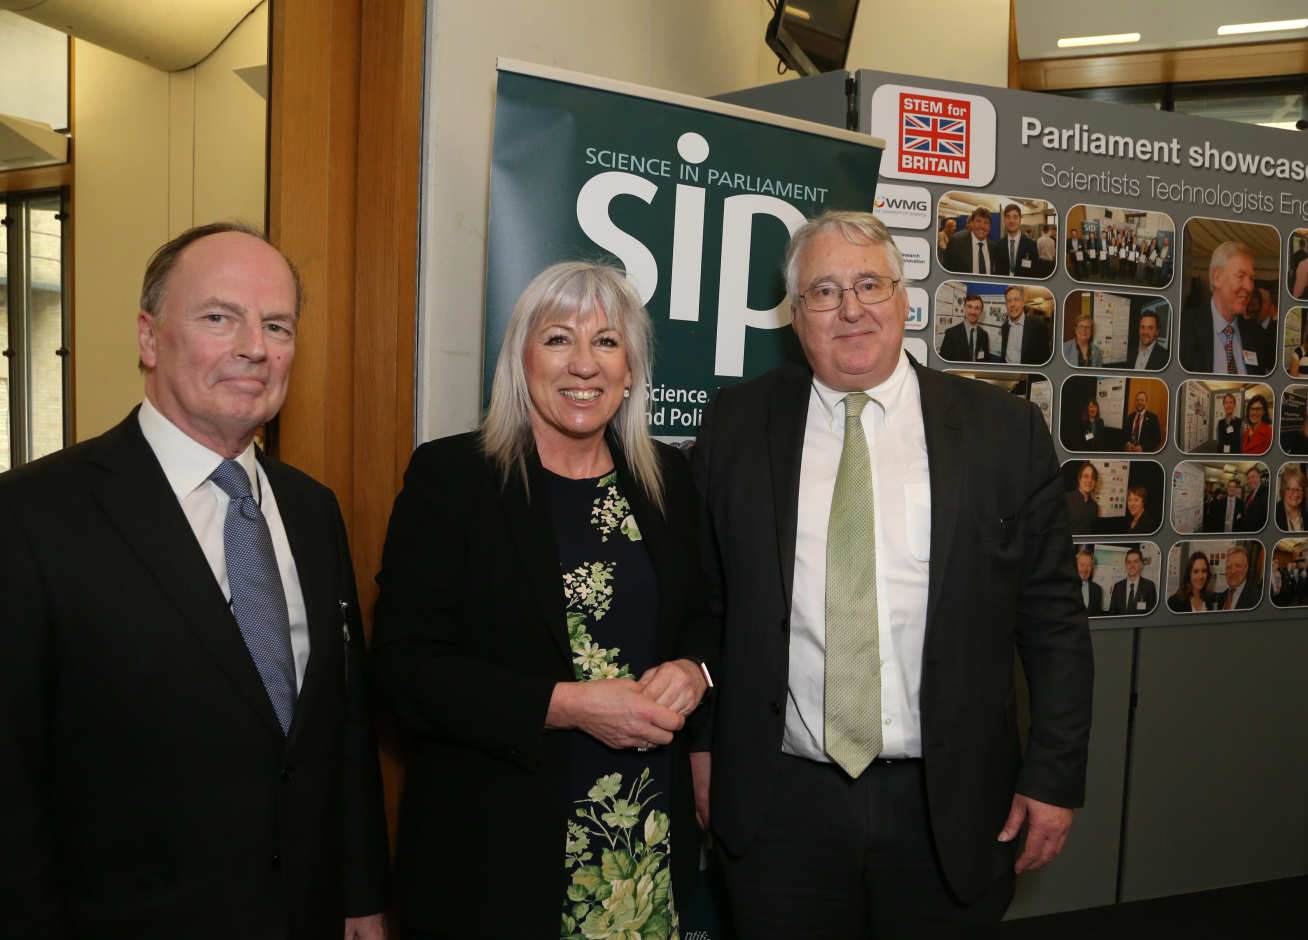 MPs visit STEM for BRITAIN